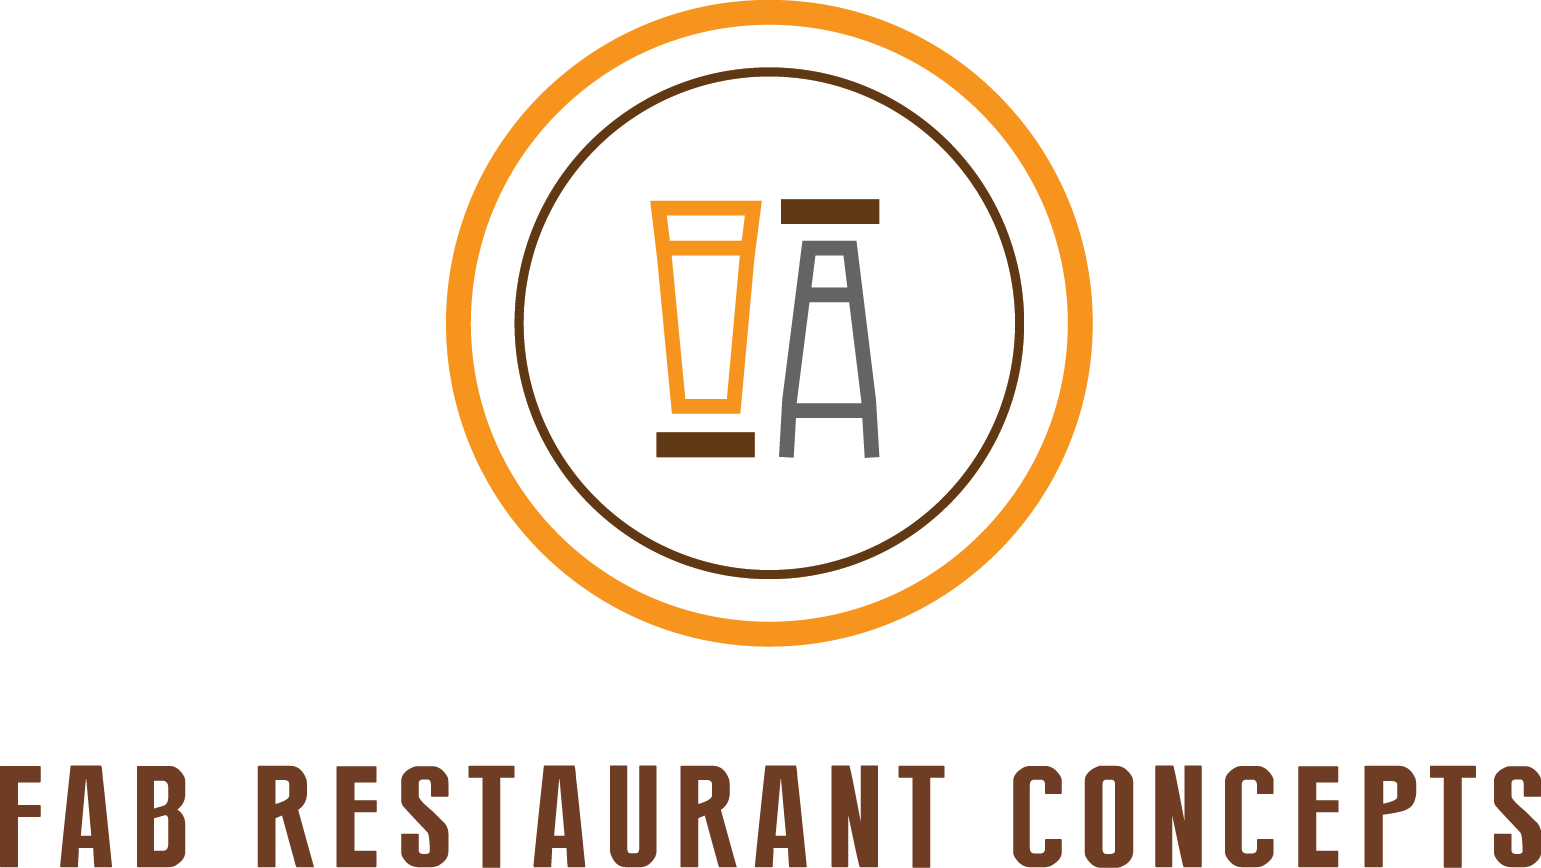 FAB Restaurant Concepts logo